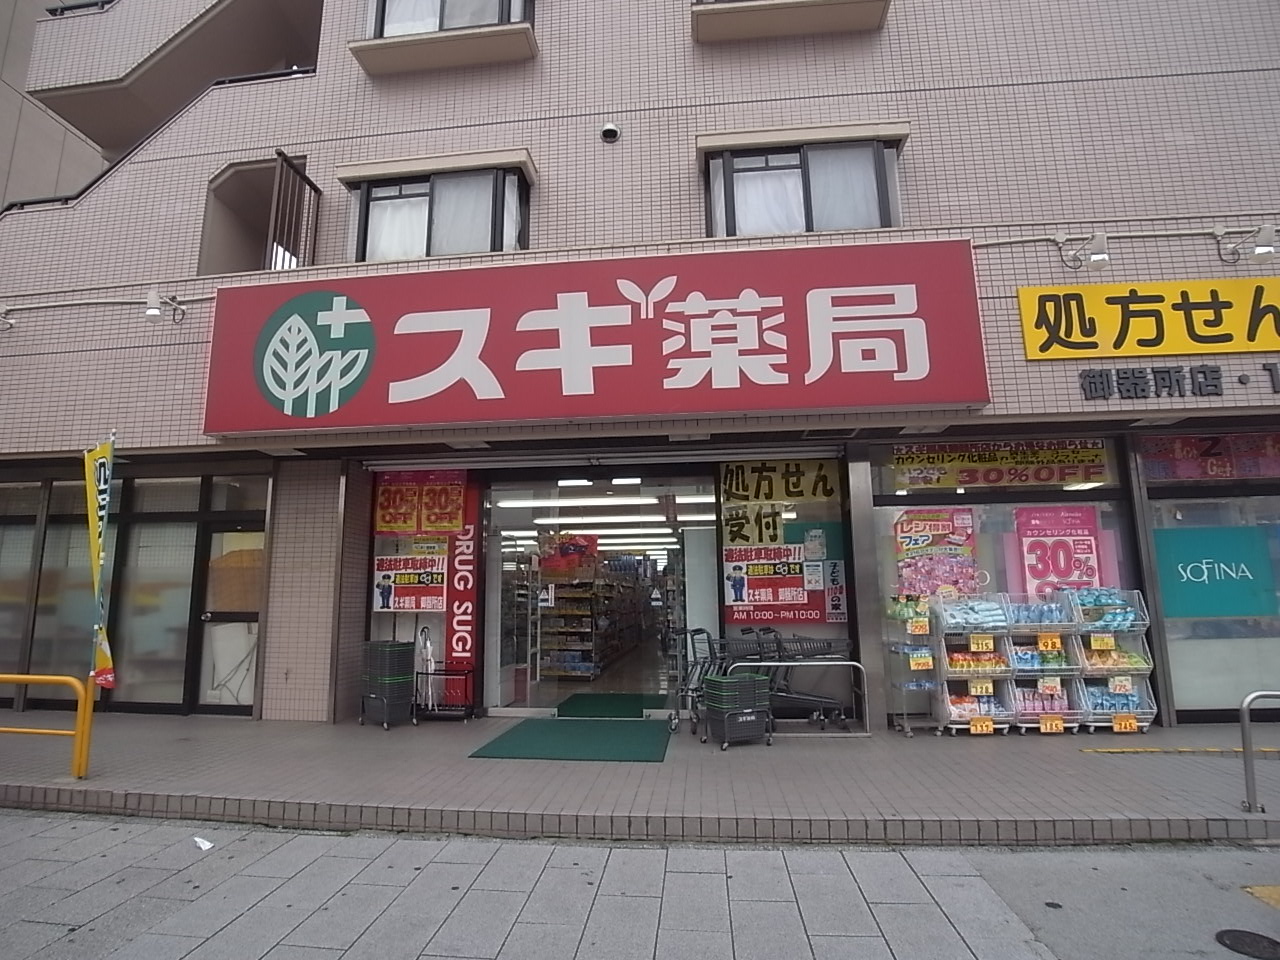 Dorakkusutoa. Cedar pharmacy Gokisho shop 1100m until (drugstore)